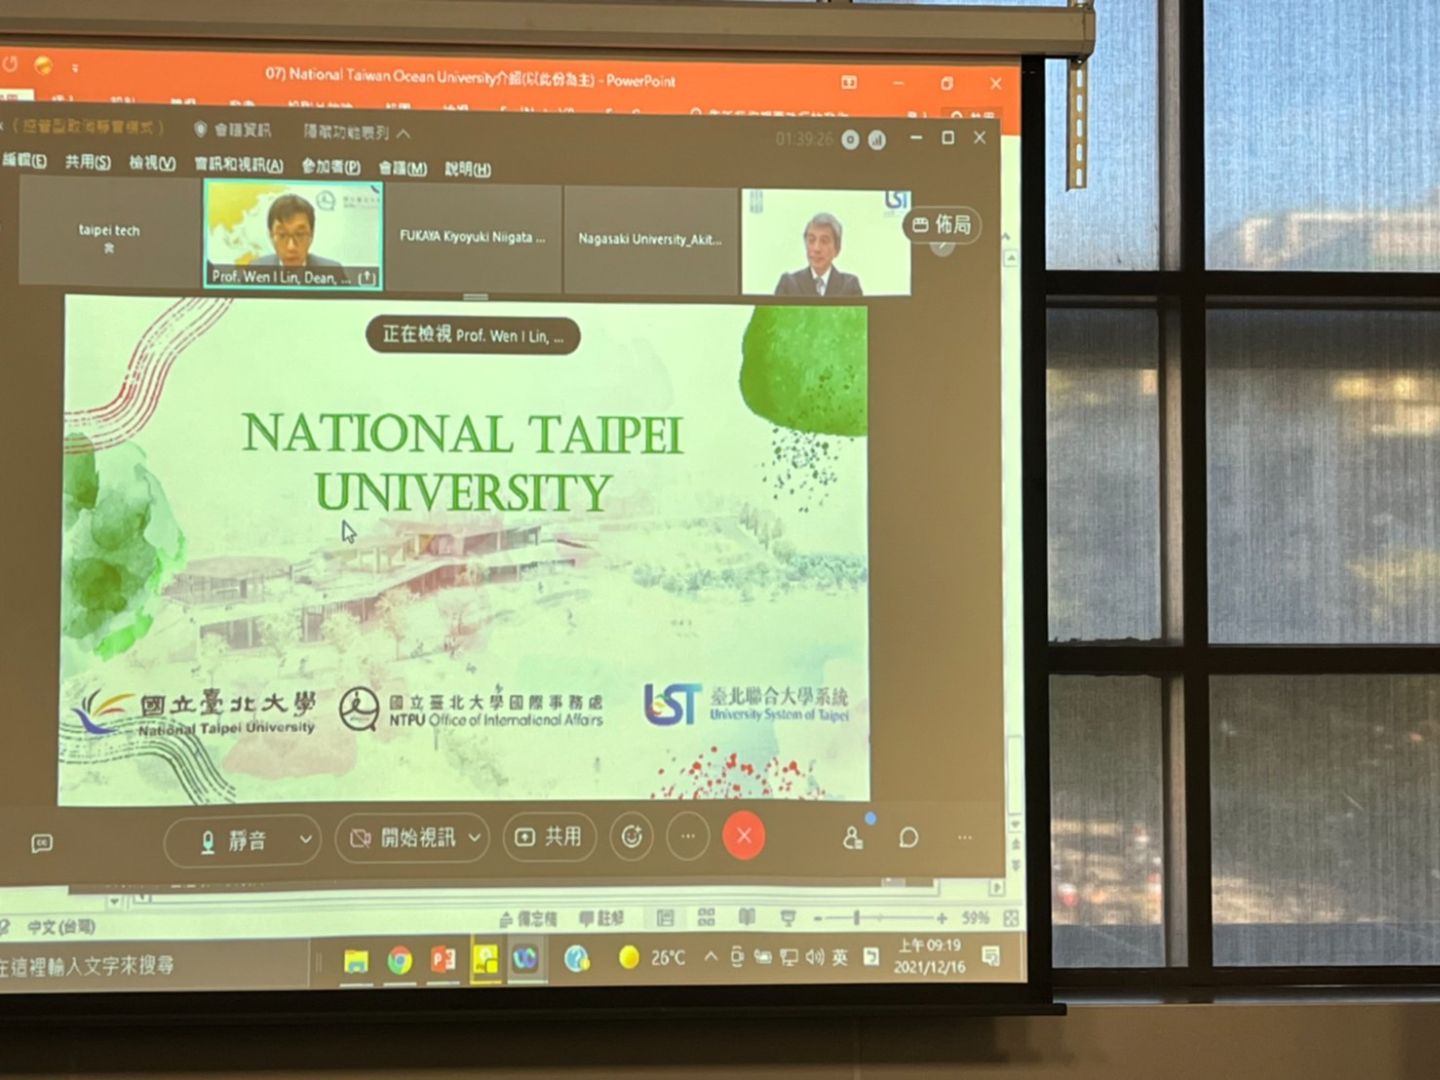 Dr. We-I Lin introduced NTPU